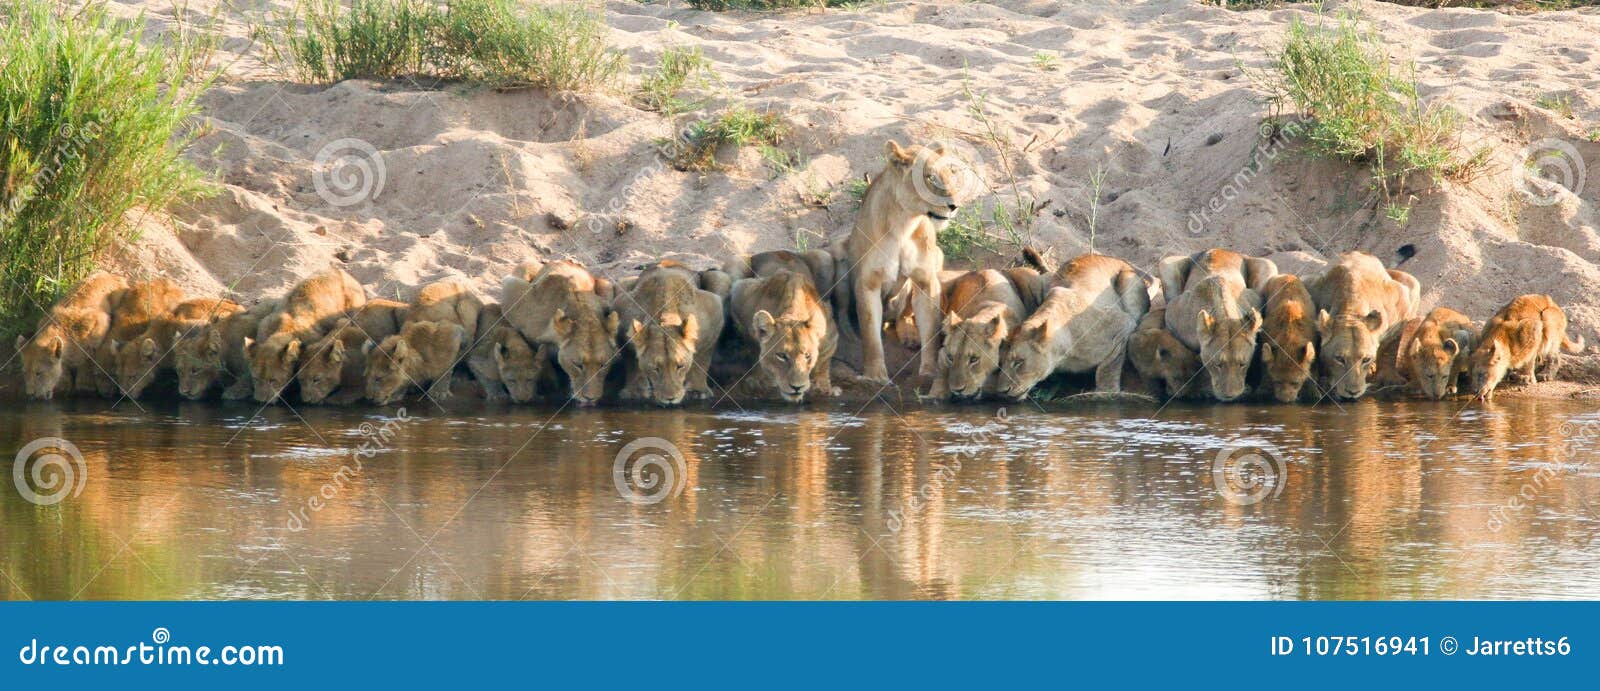 lion pride drinking in kruger national park south africa